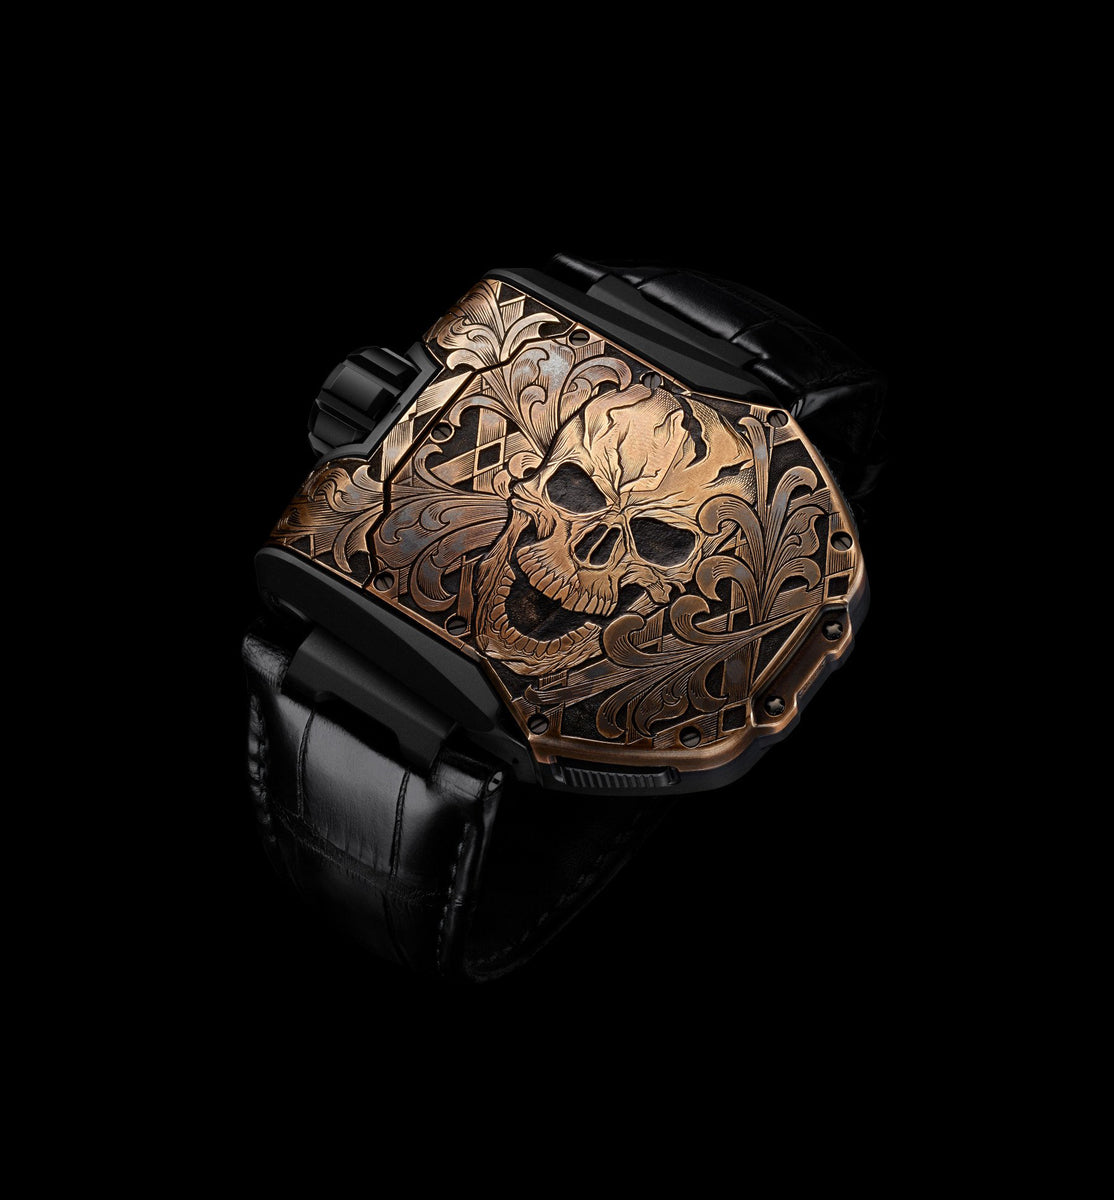 Introducing the Urwerk UR-T8 Skull, Engraved by King Nerd - Revolution Watch